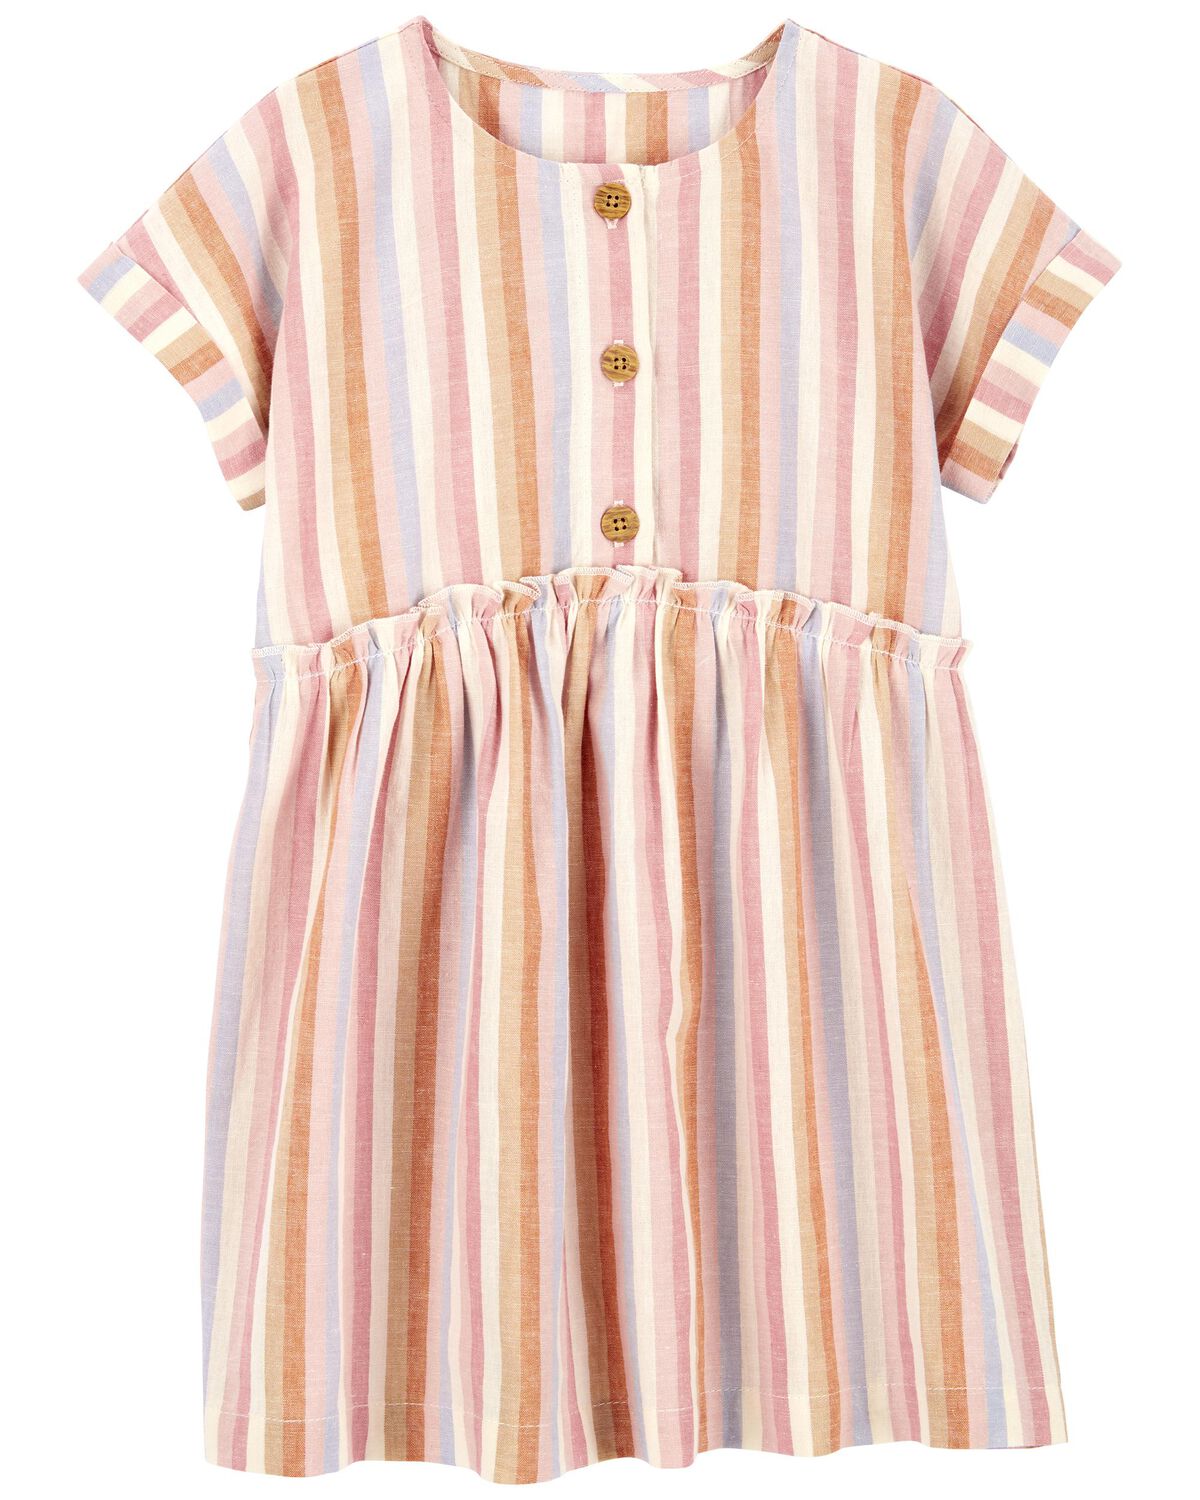 Multi Toddler Striped Linen Dress | carters.com